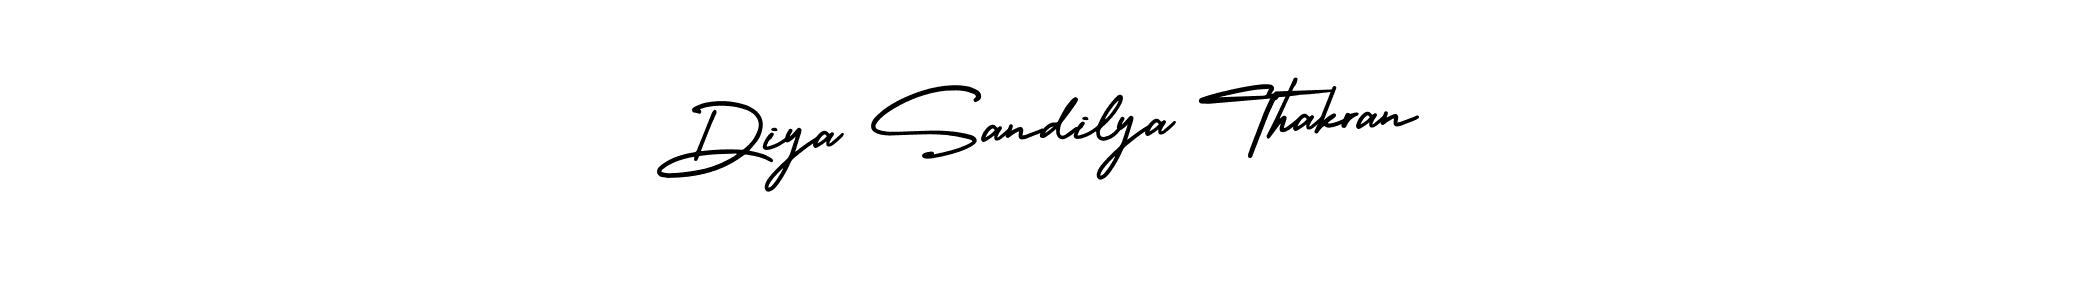 How to Draw Diya Sandilya Thakran signature style? AmerikaSignatureDemo-Regular is a latest design signature styles for name Diya Sandilya Thakran. Diya Sandilya Thakran signature style 3 images and pictures png